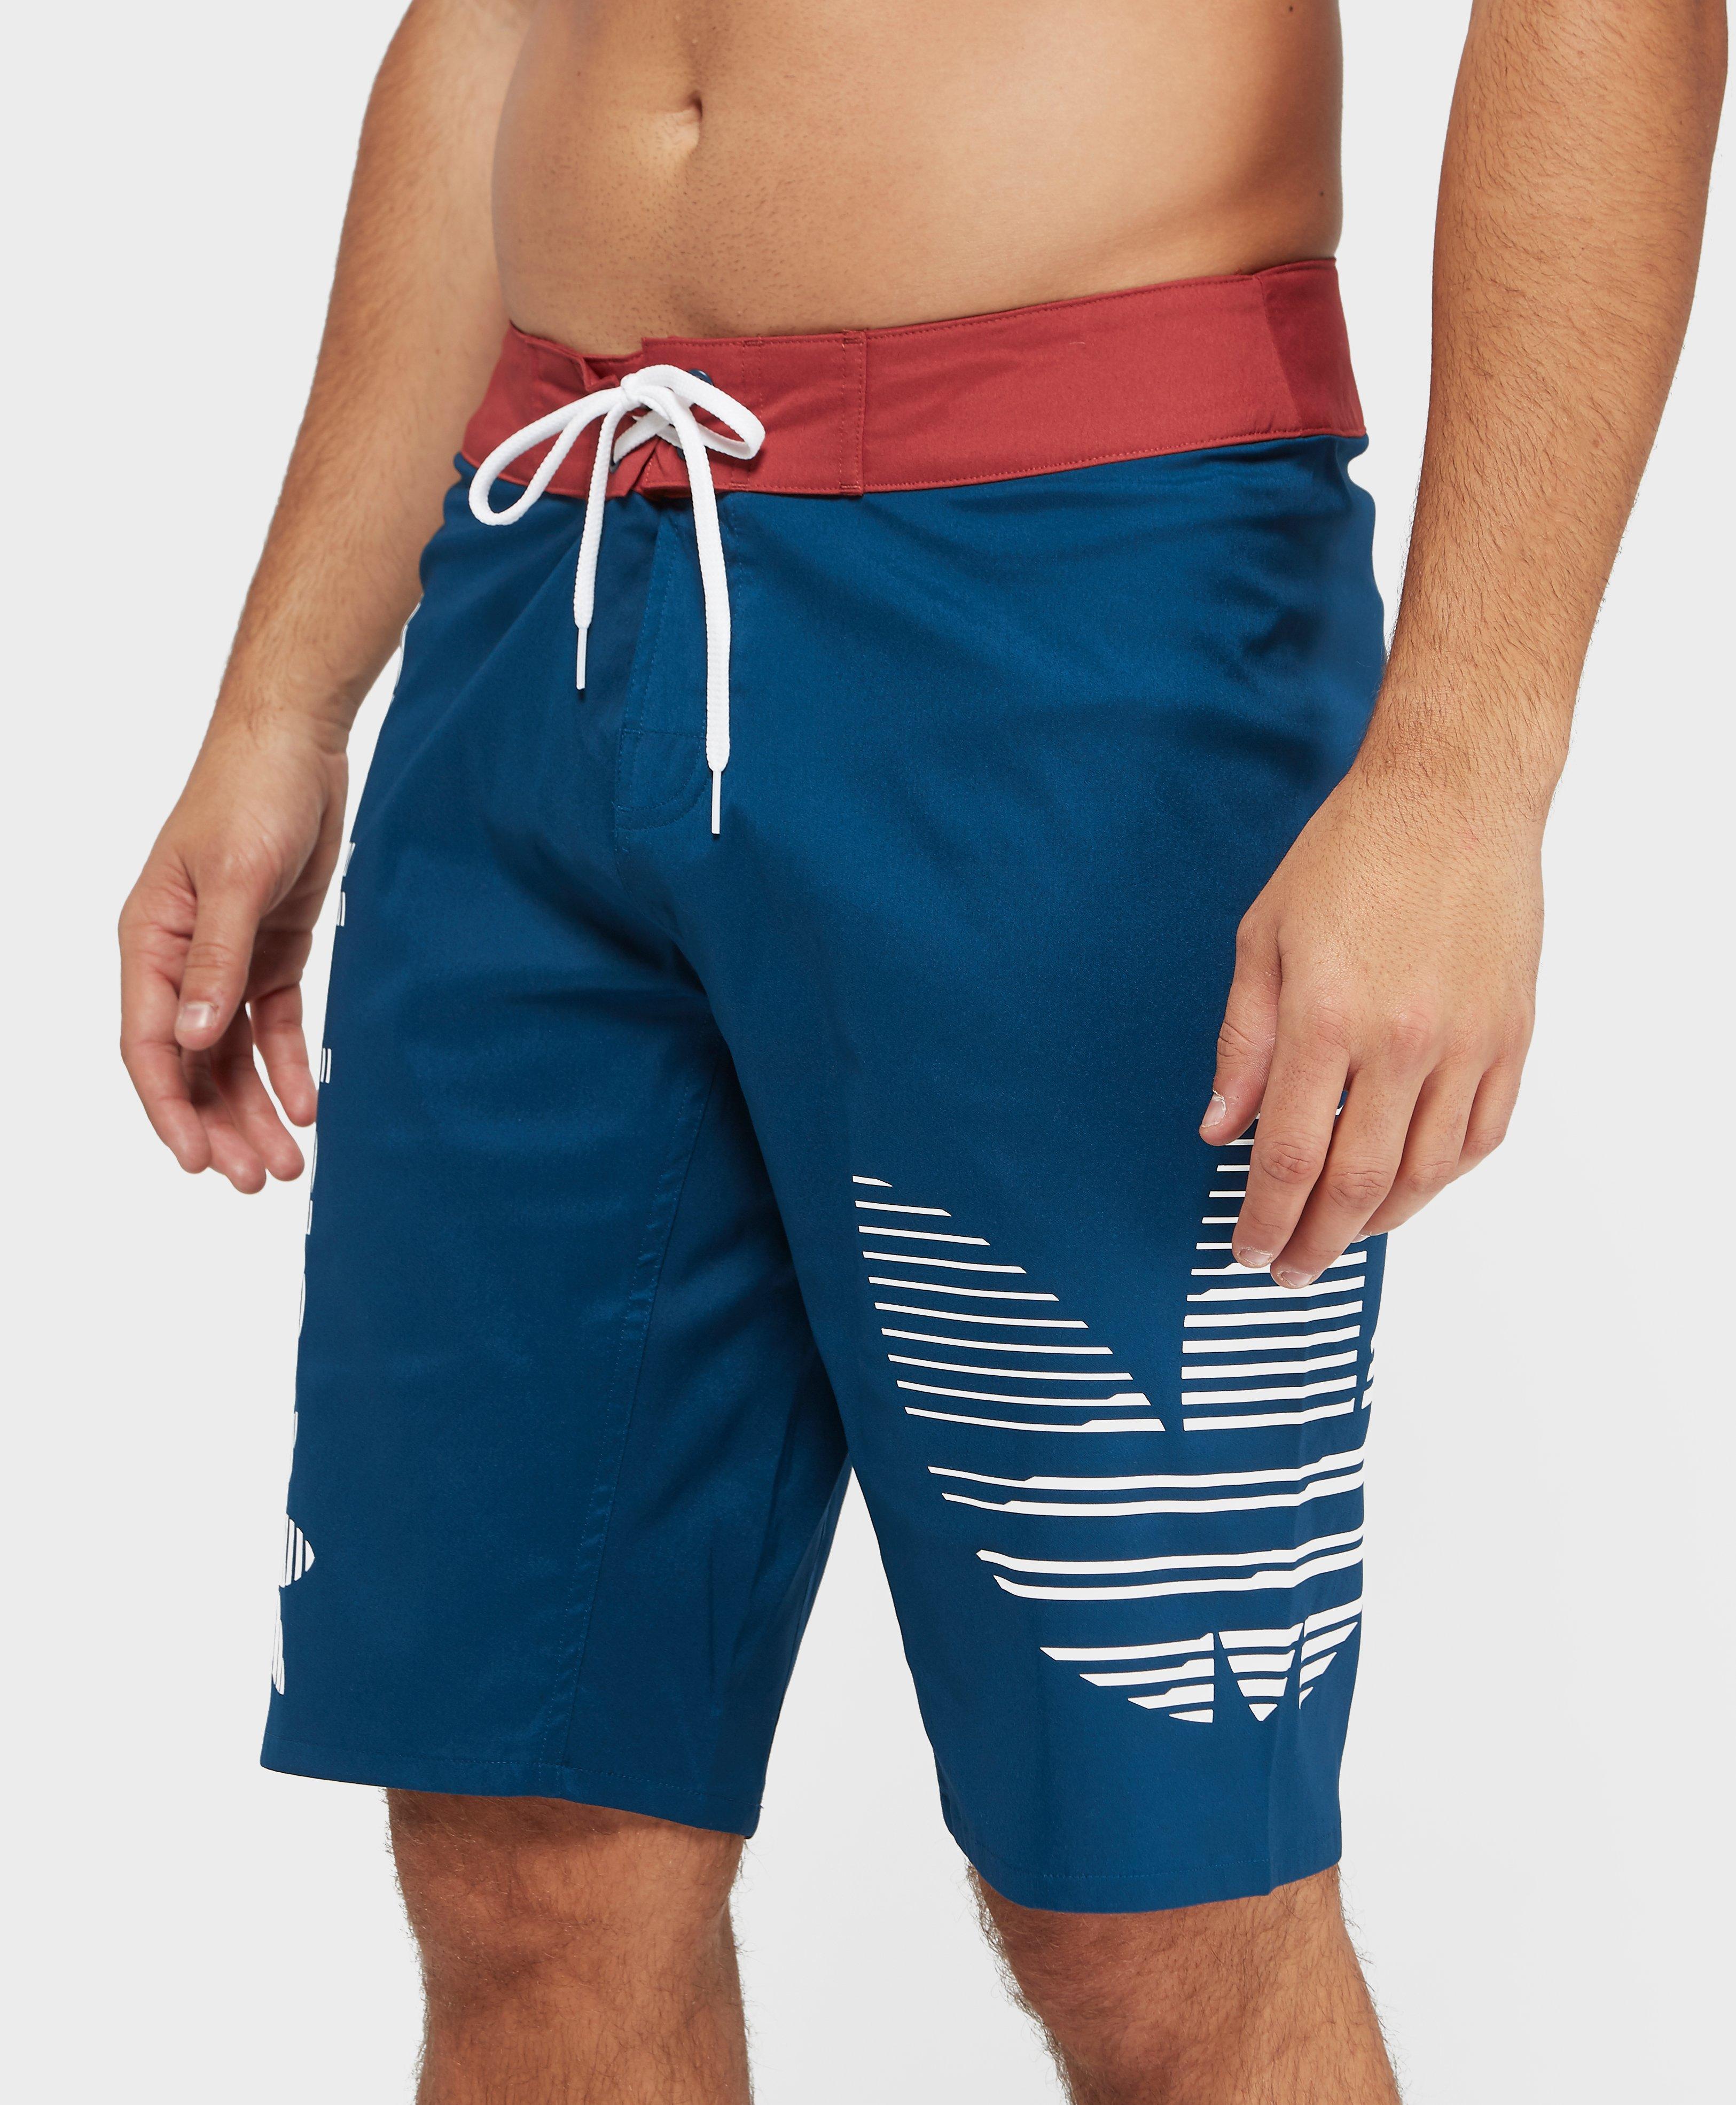 adidas Originals As Board Swim Shorts in Blue for Men - Lyst